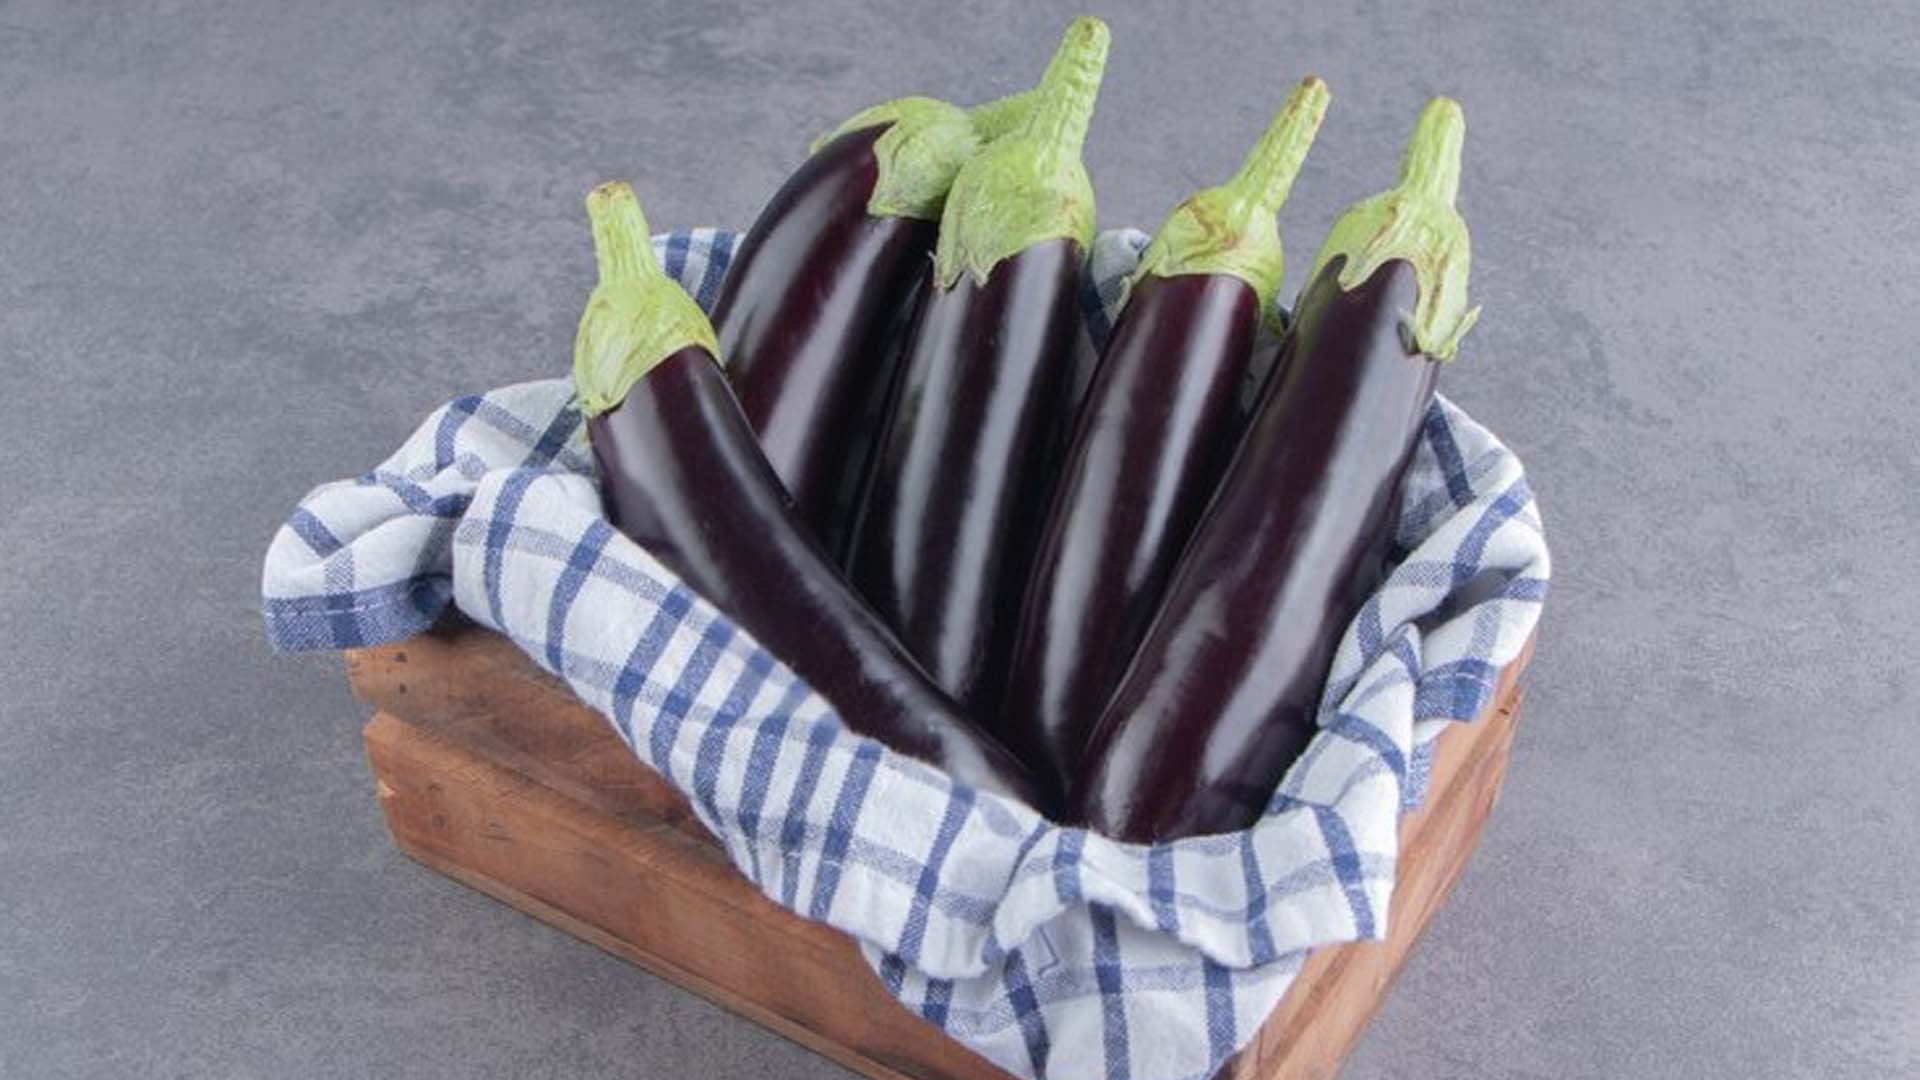 Brinjal or Eggplant